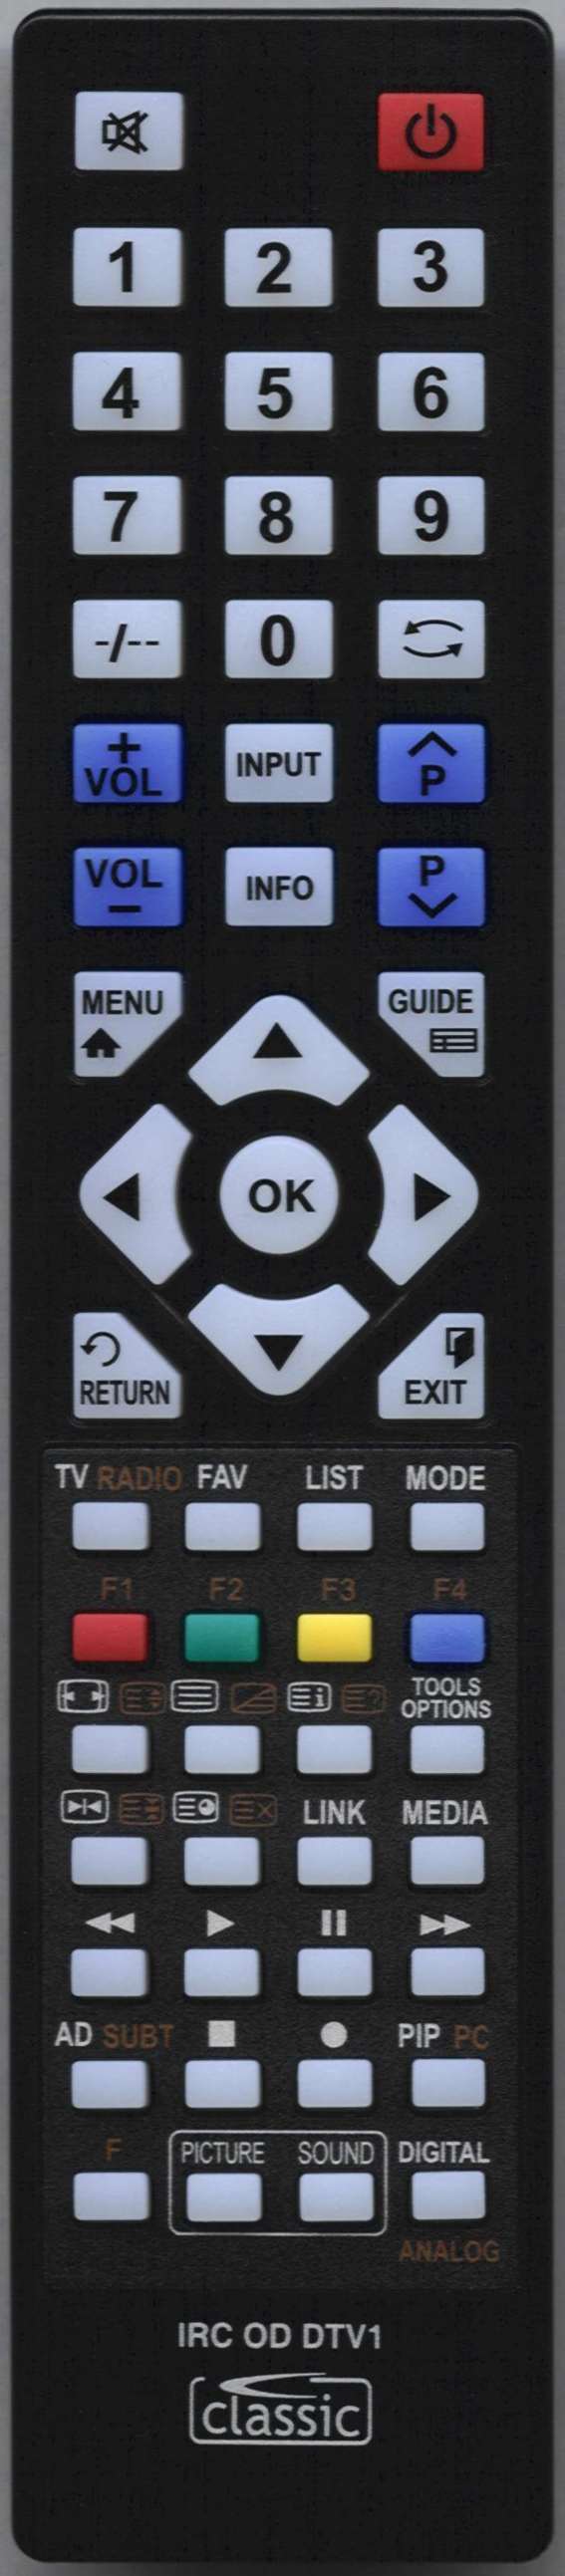 FINLUX RC-4996 Remote Control Alternative